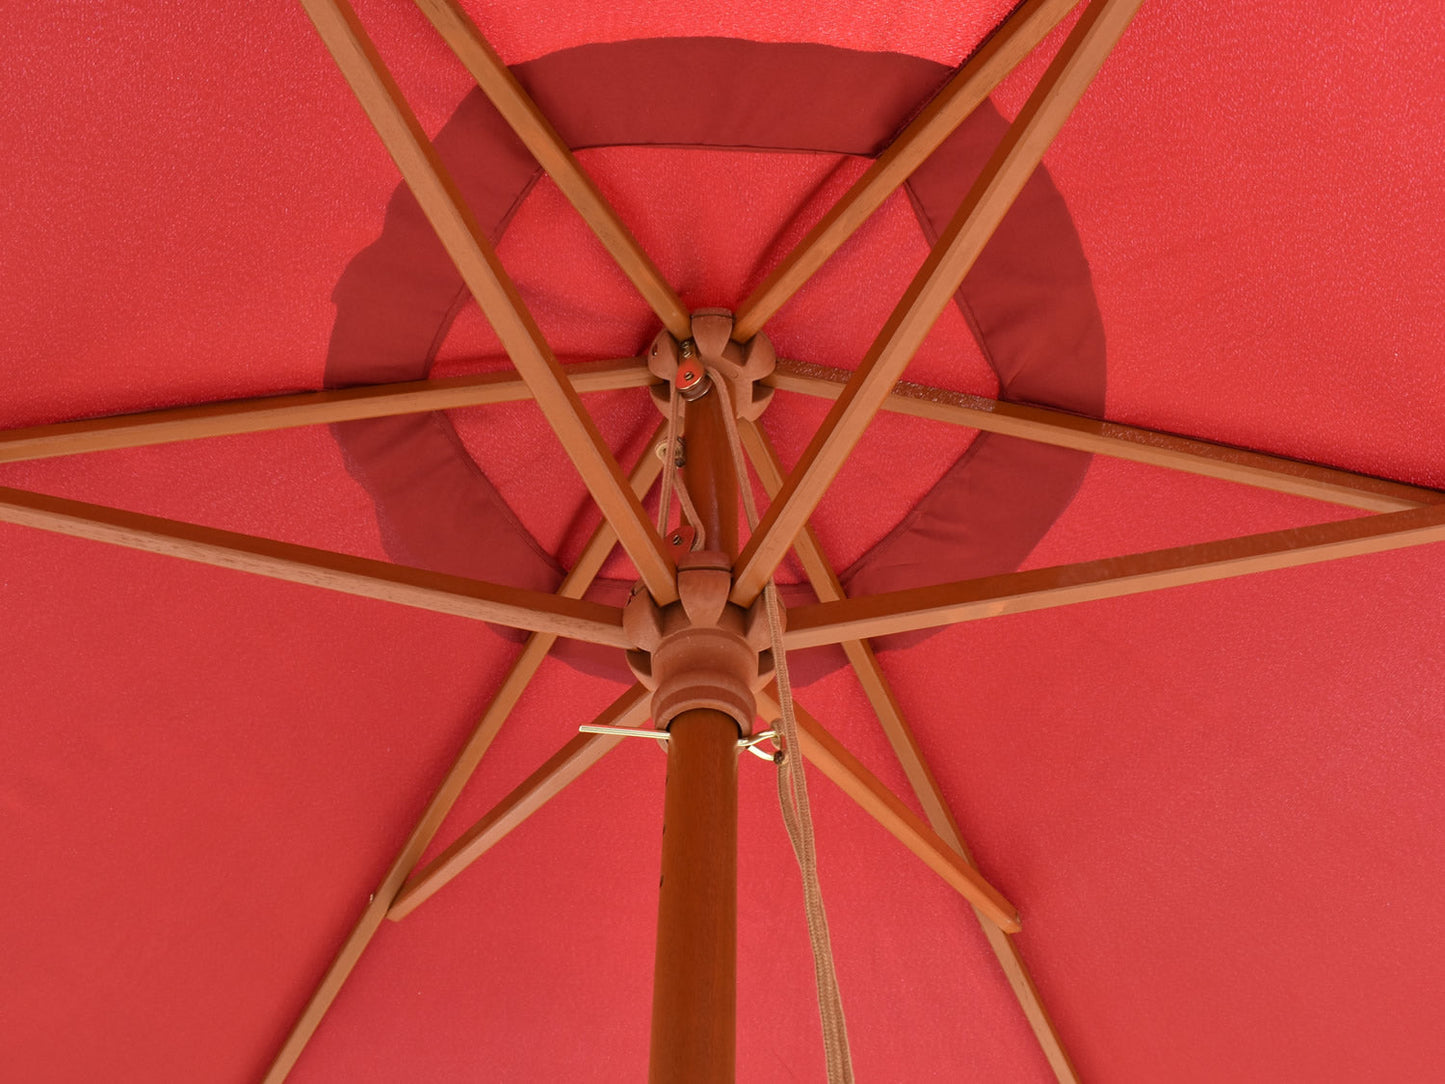 2.5 parasol underside struts Burgundy